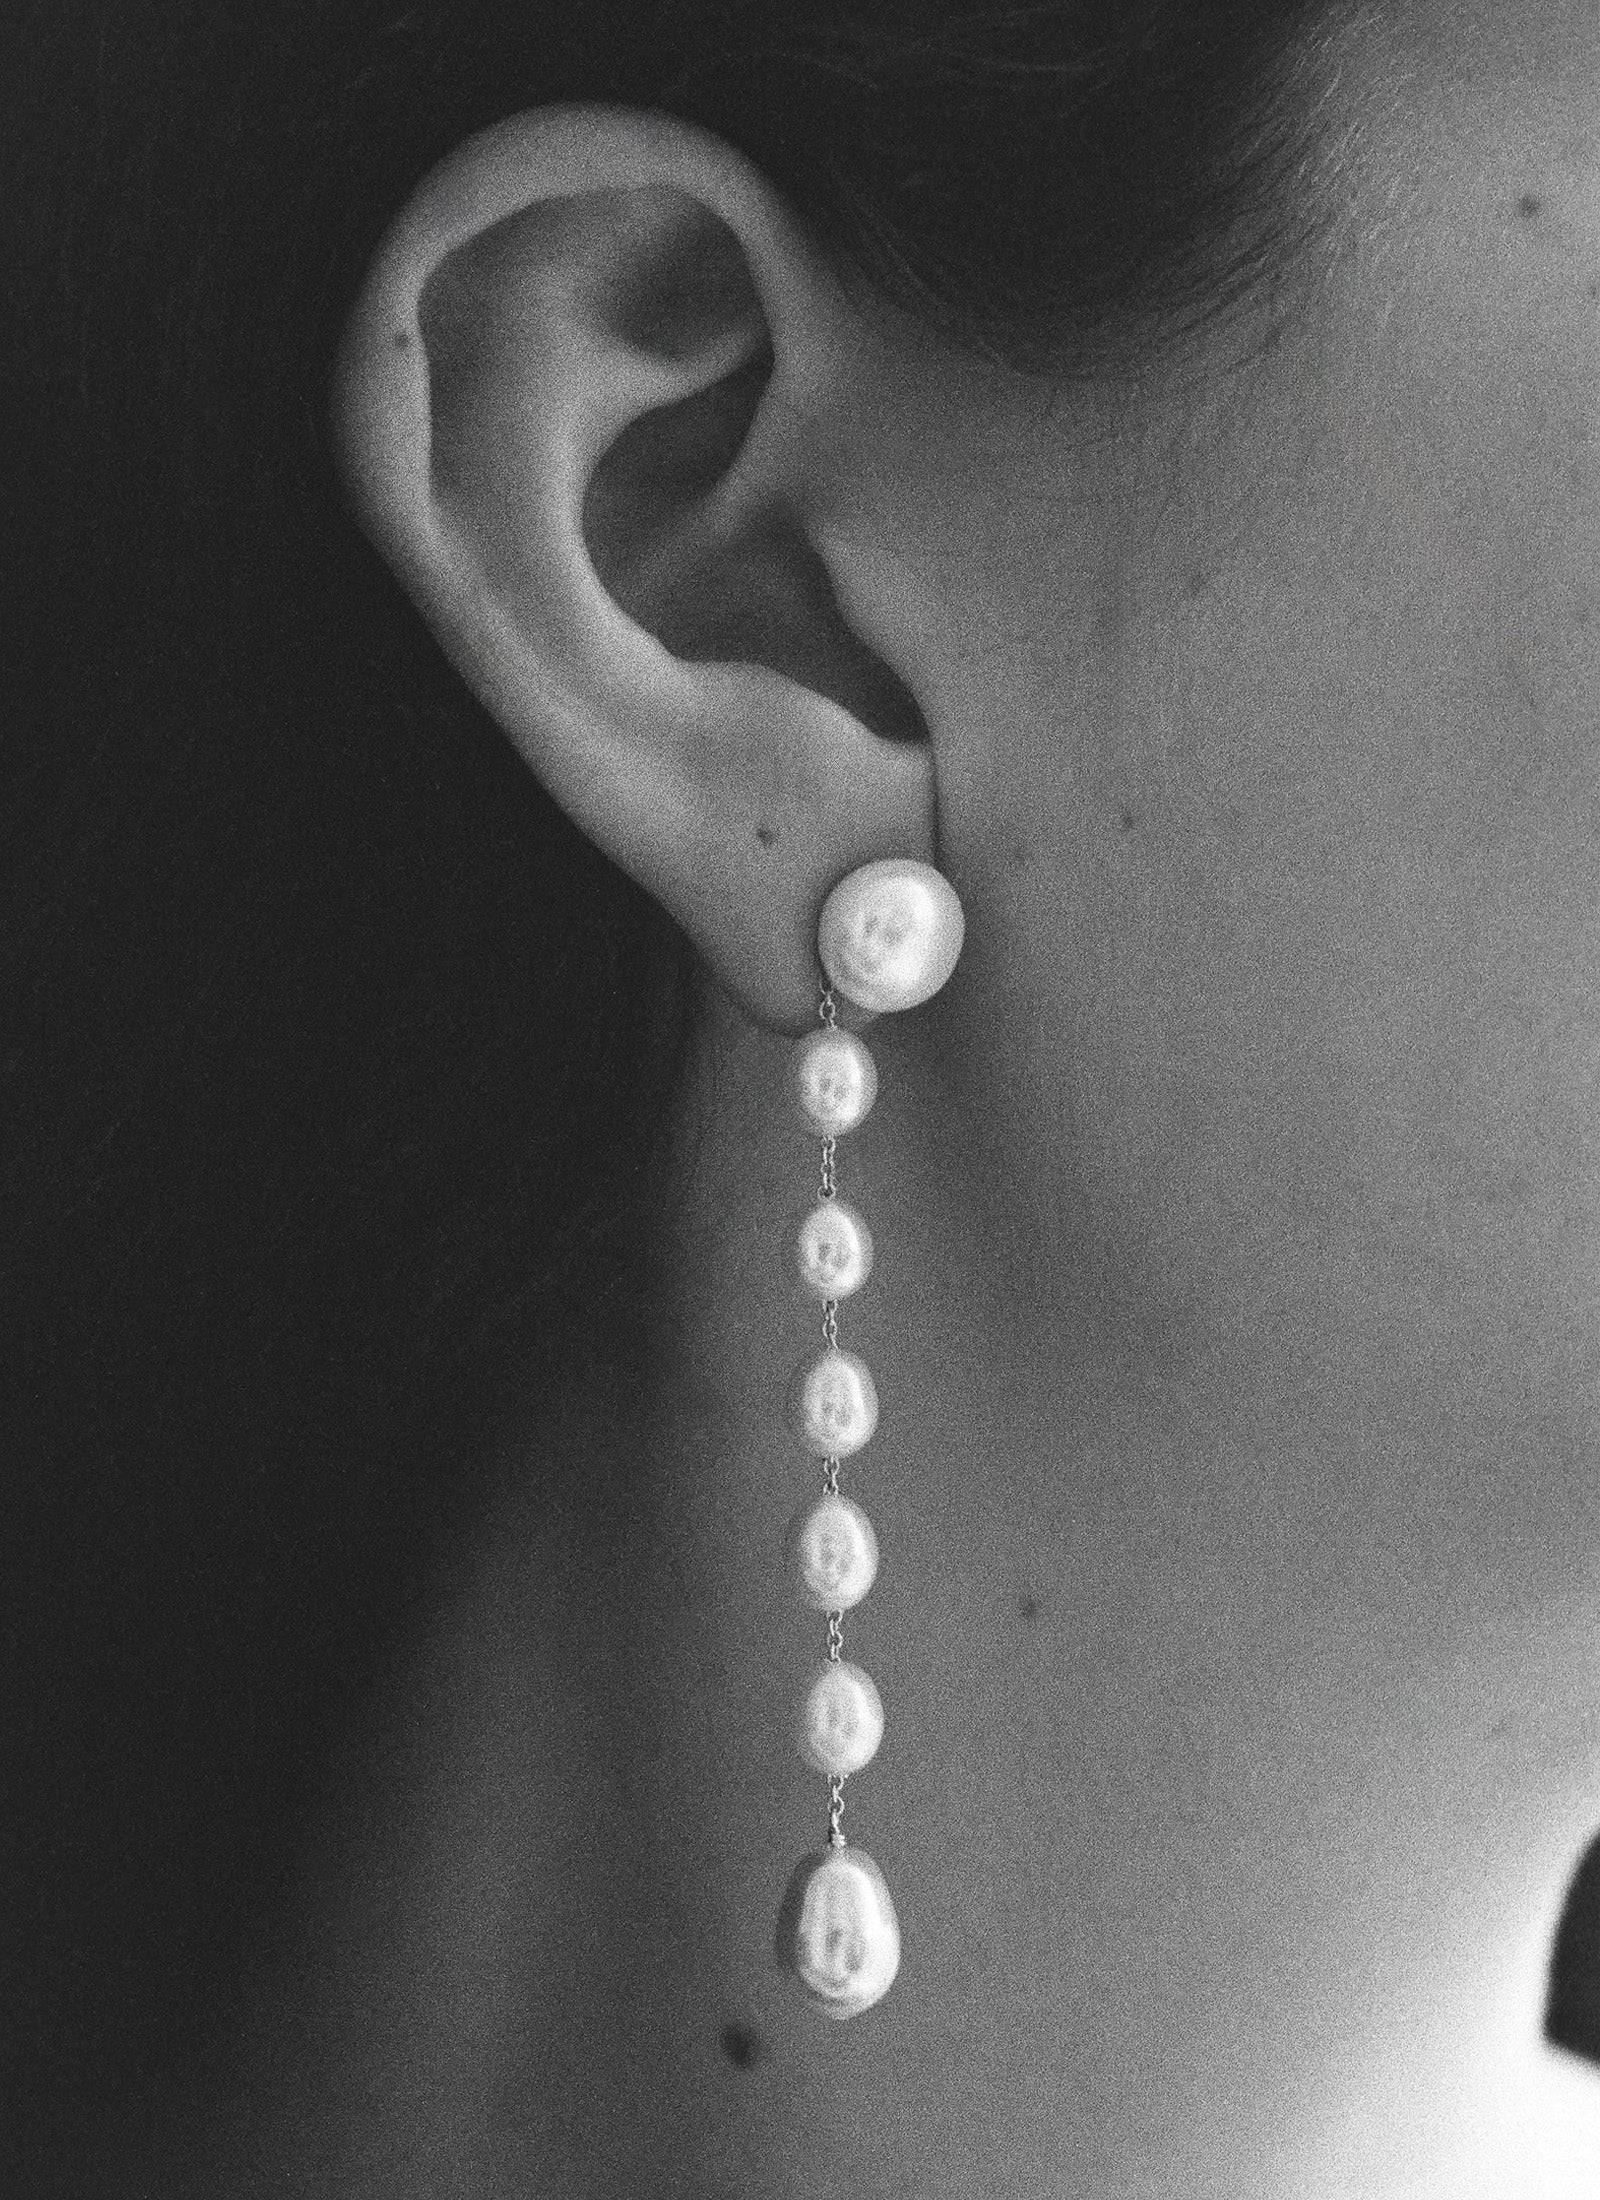 Medium Passante Earrings - White Pearl